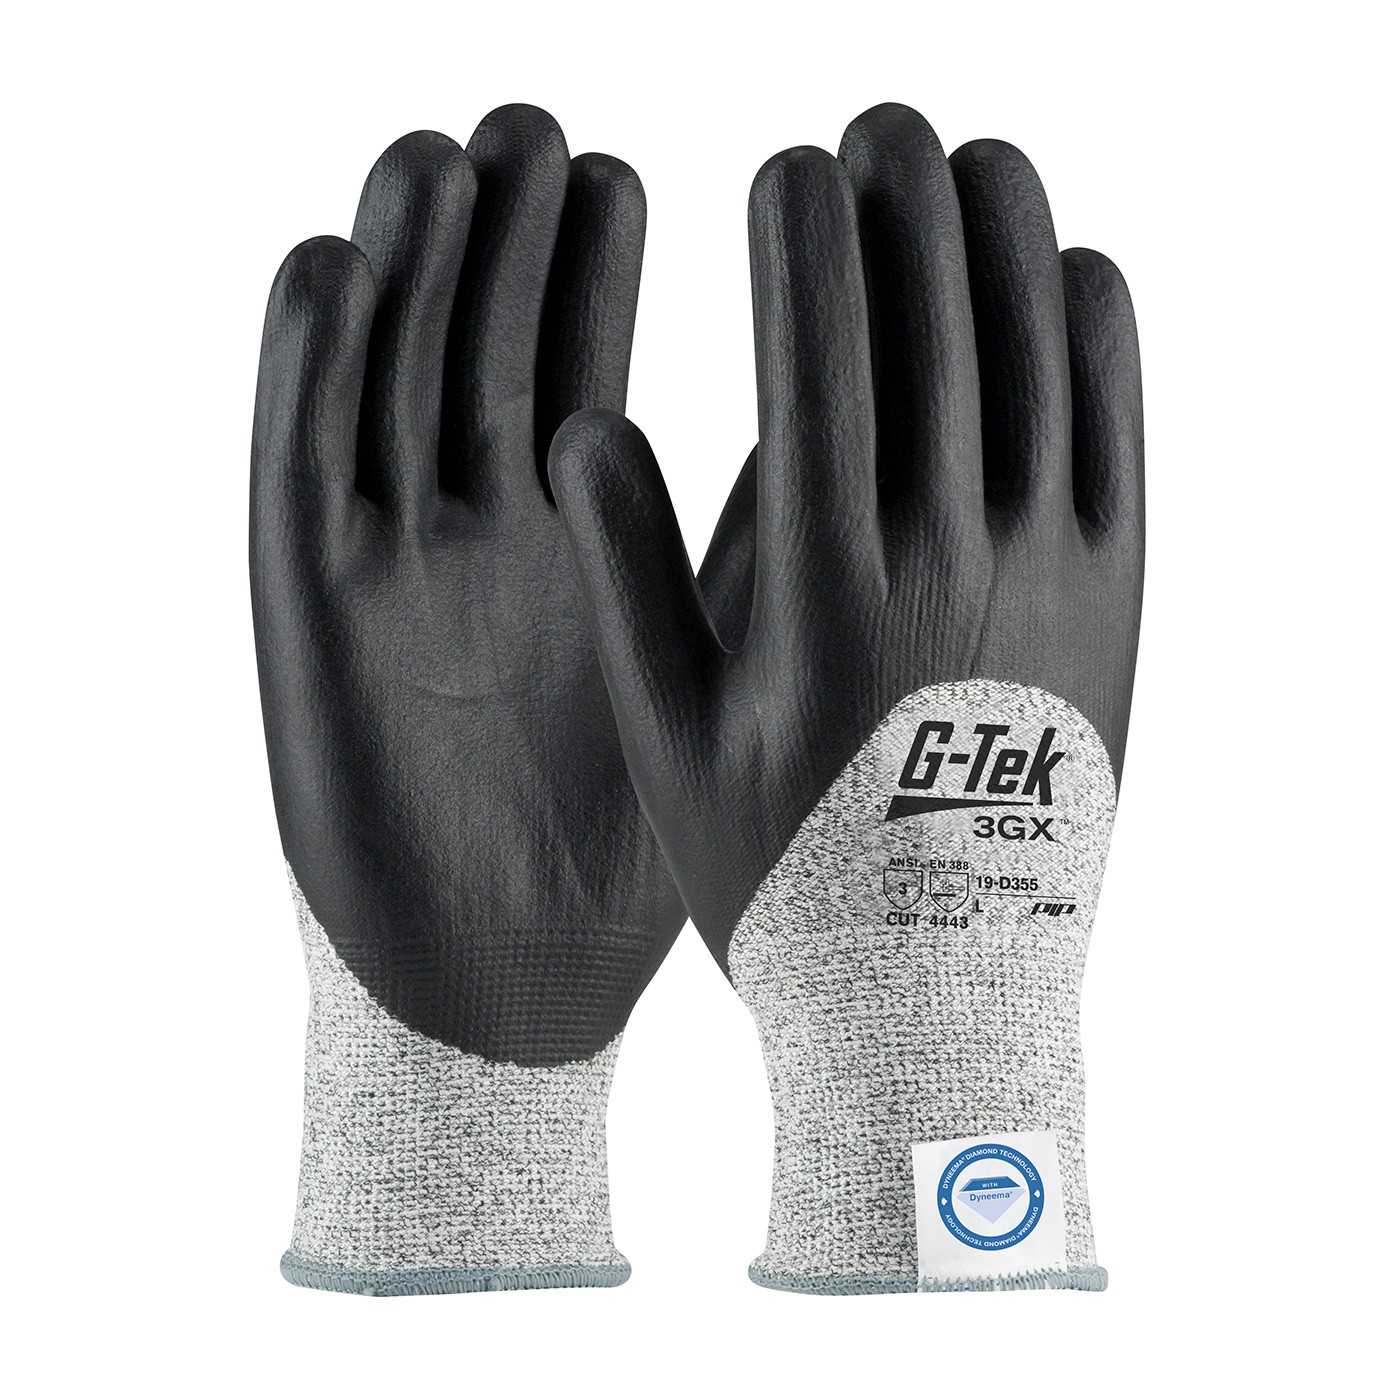 G-Tek® 3GX® Seamless Knit Dyneema® Diamond Blended Glove with Nitrile Coated Foam Grip on Palm, Fingers & Knuckles  (#19-D355)